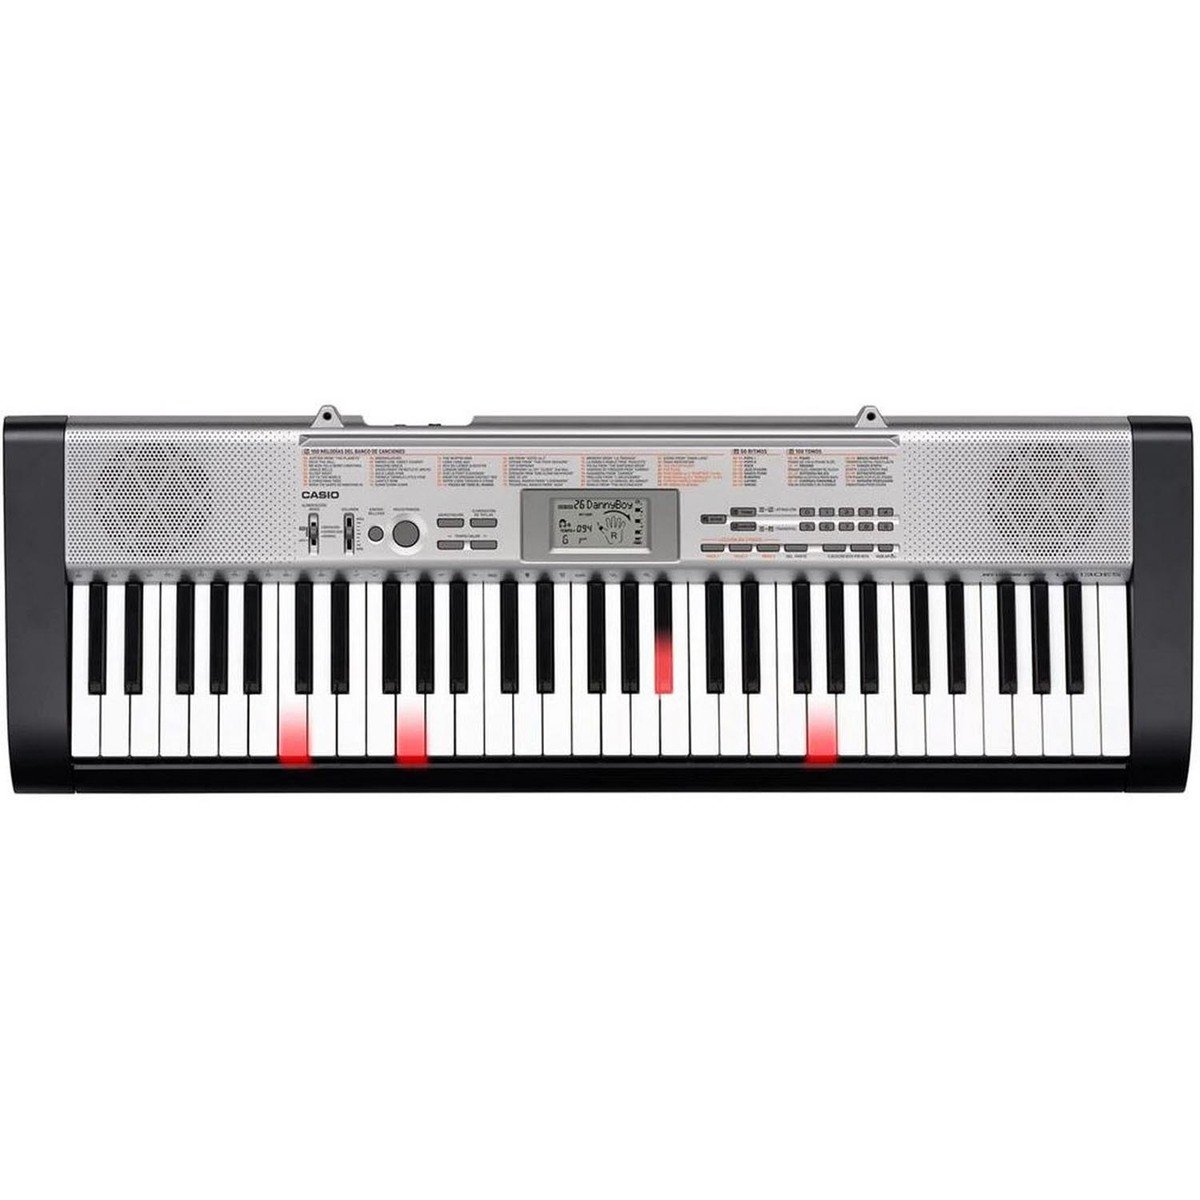 Casio Keyboard LK-130